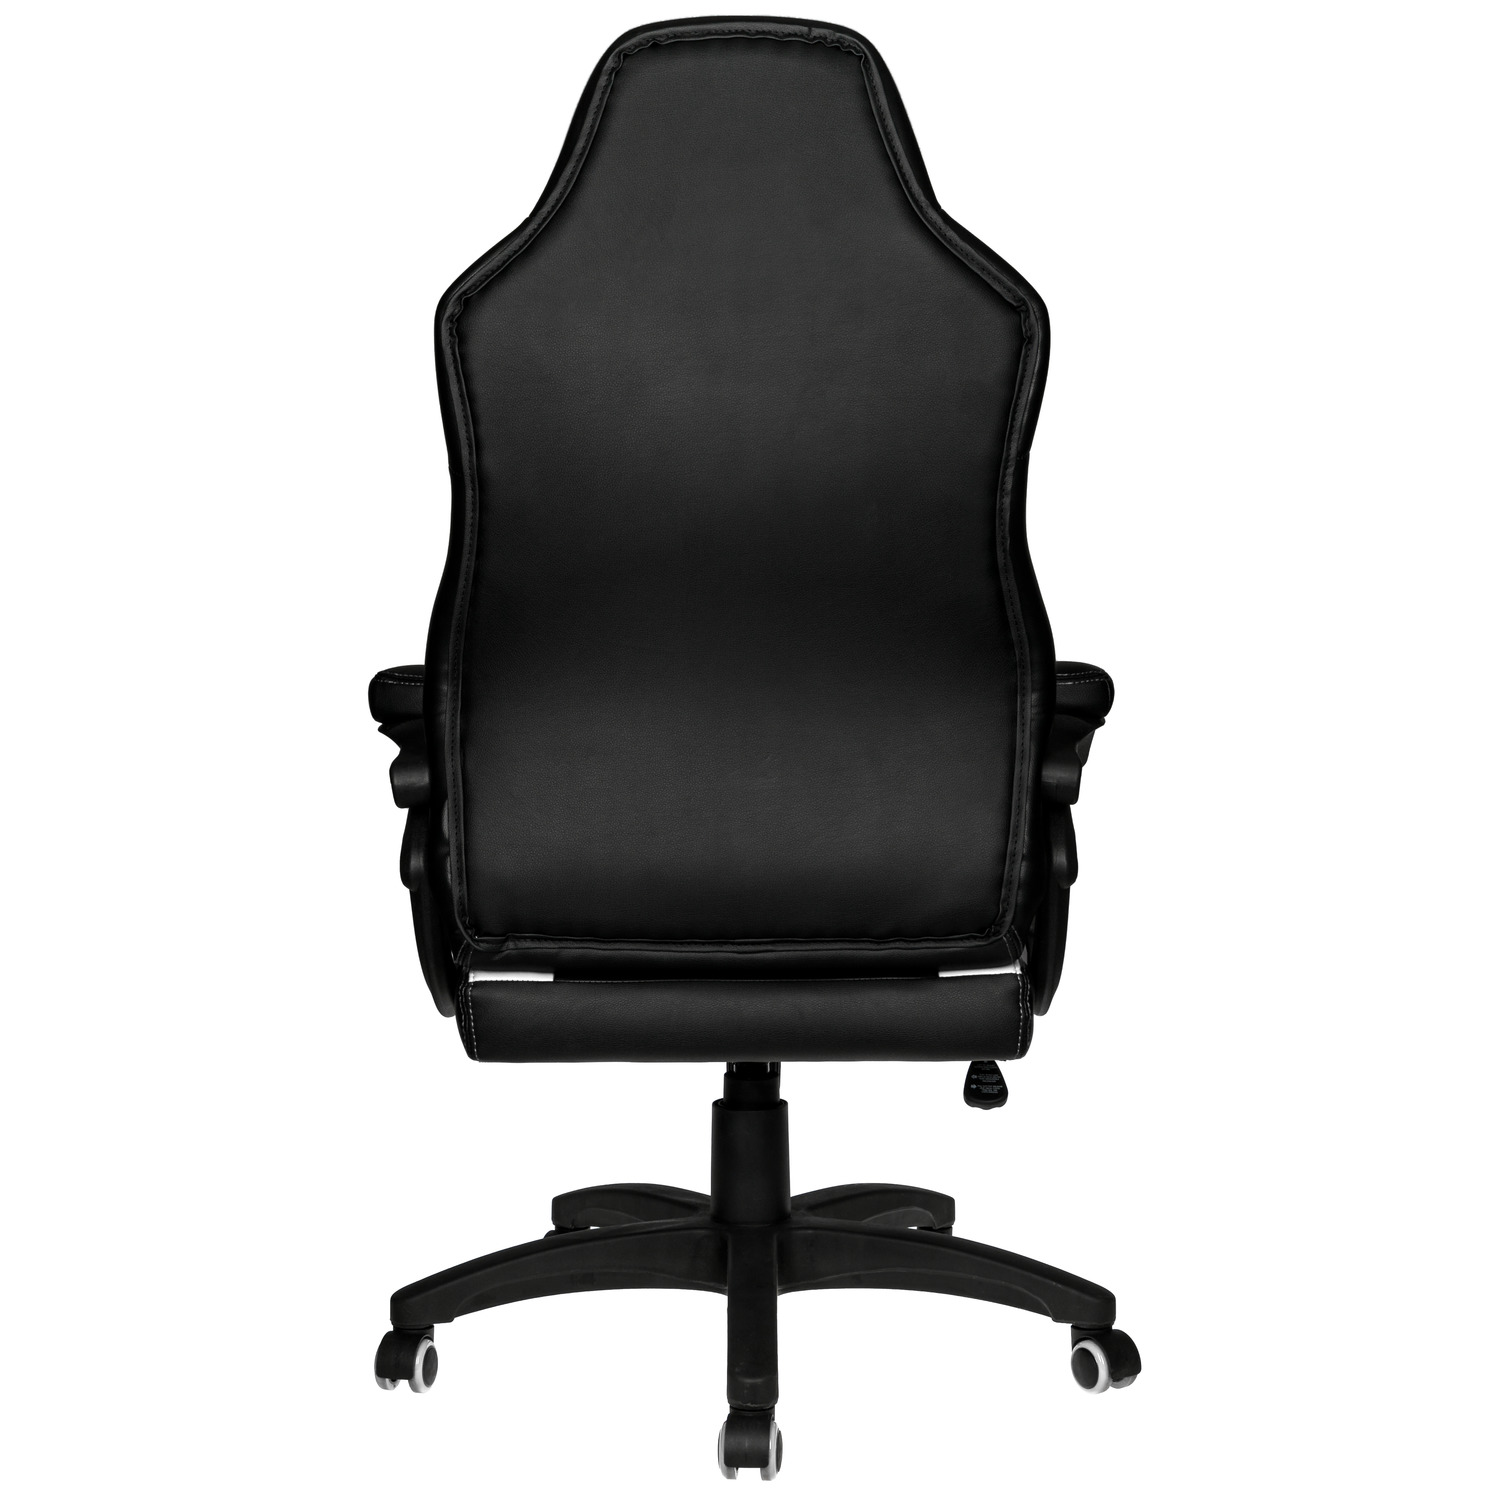 C100 Gaming Chair Black/White